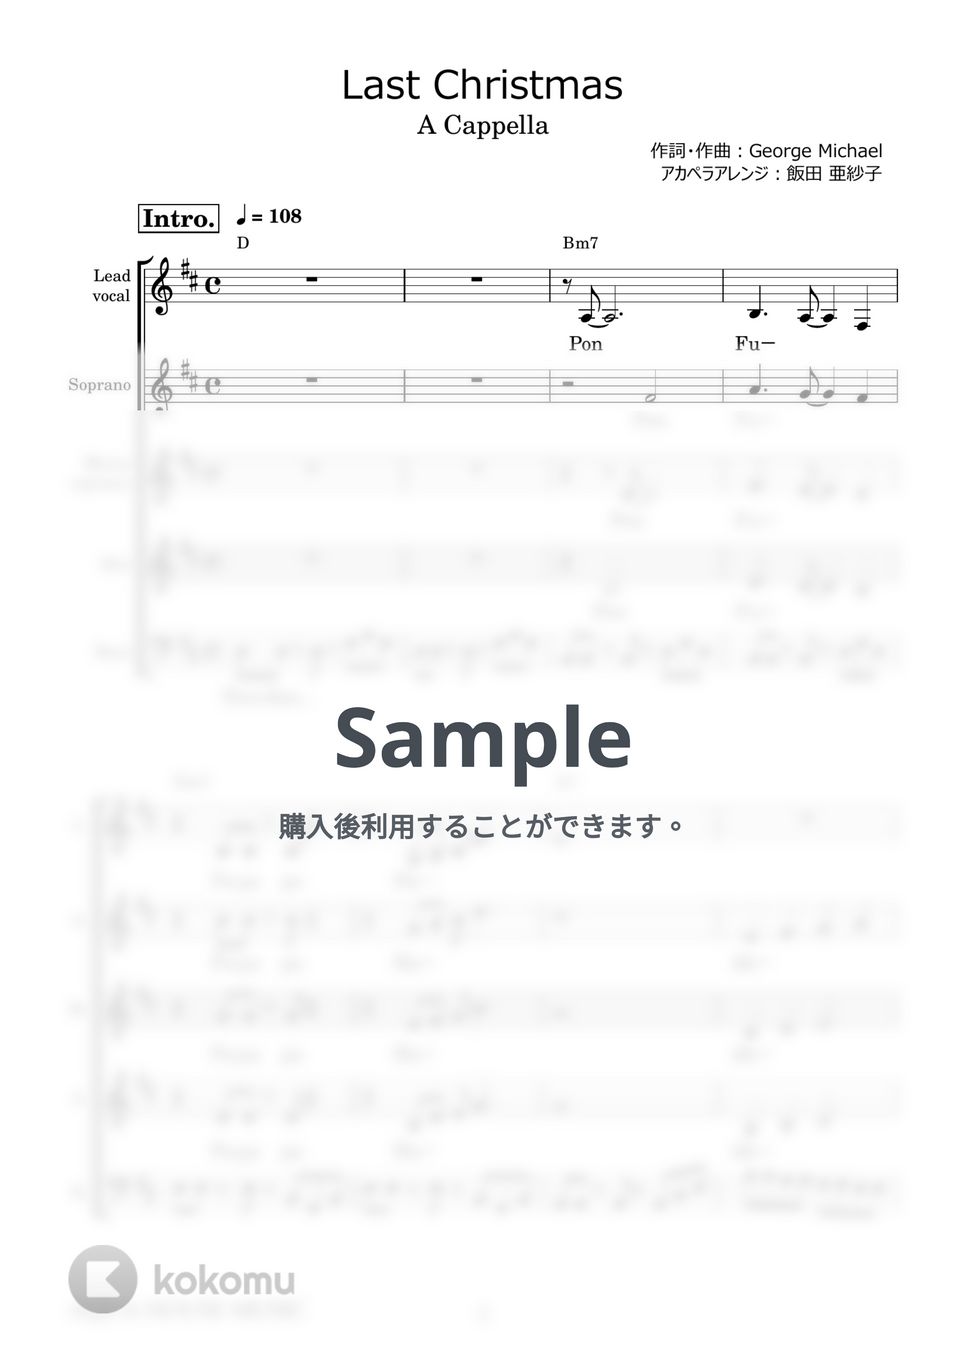 Wham! - Last Christmas (アカペラ楽譜♪５声ボイパなし) by 飯田 亜紗子